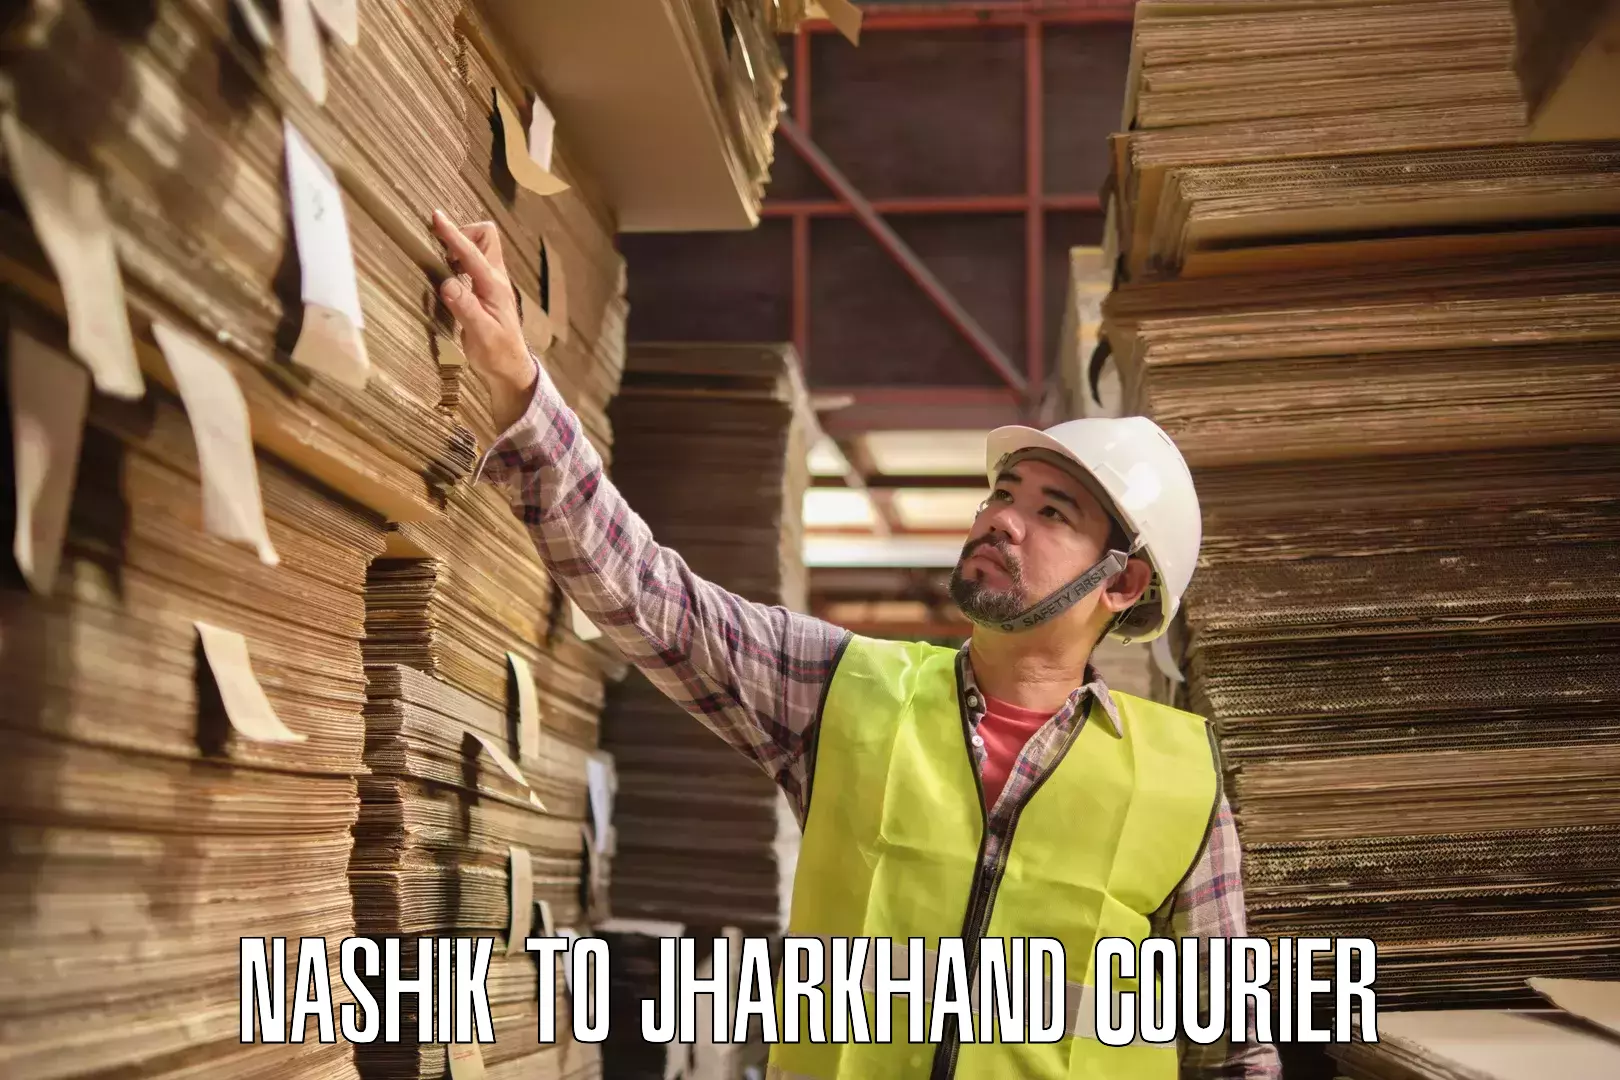 International courier networks Nashik to Jharkhand